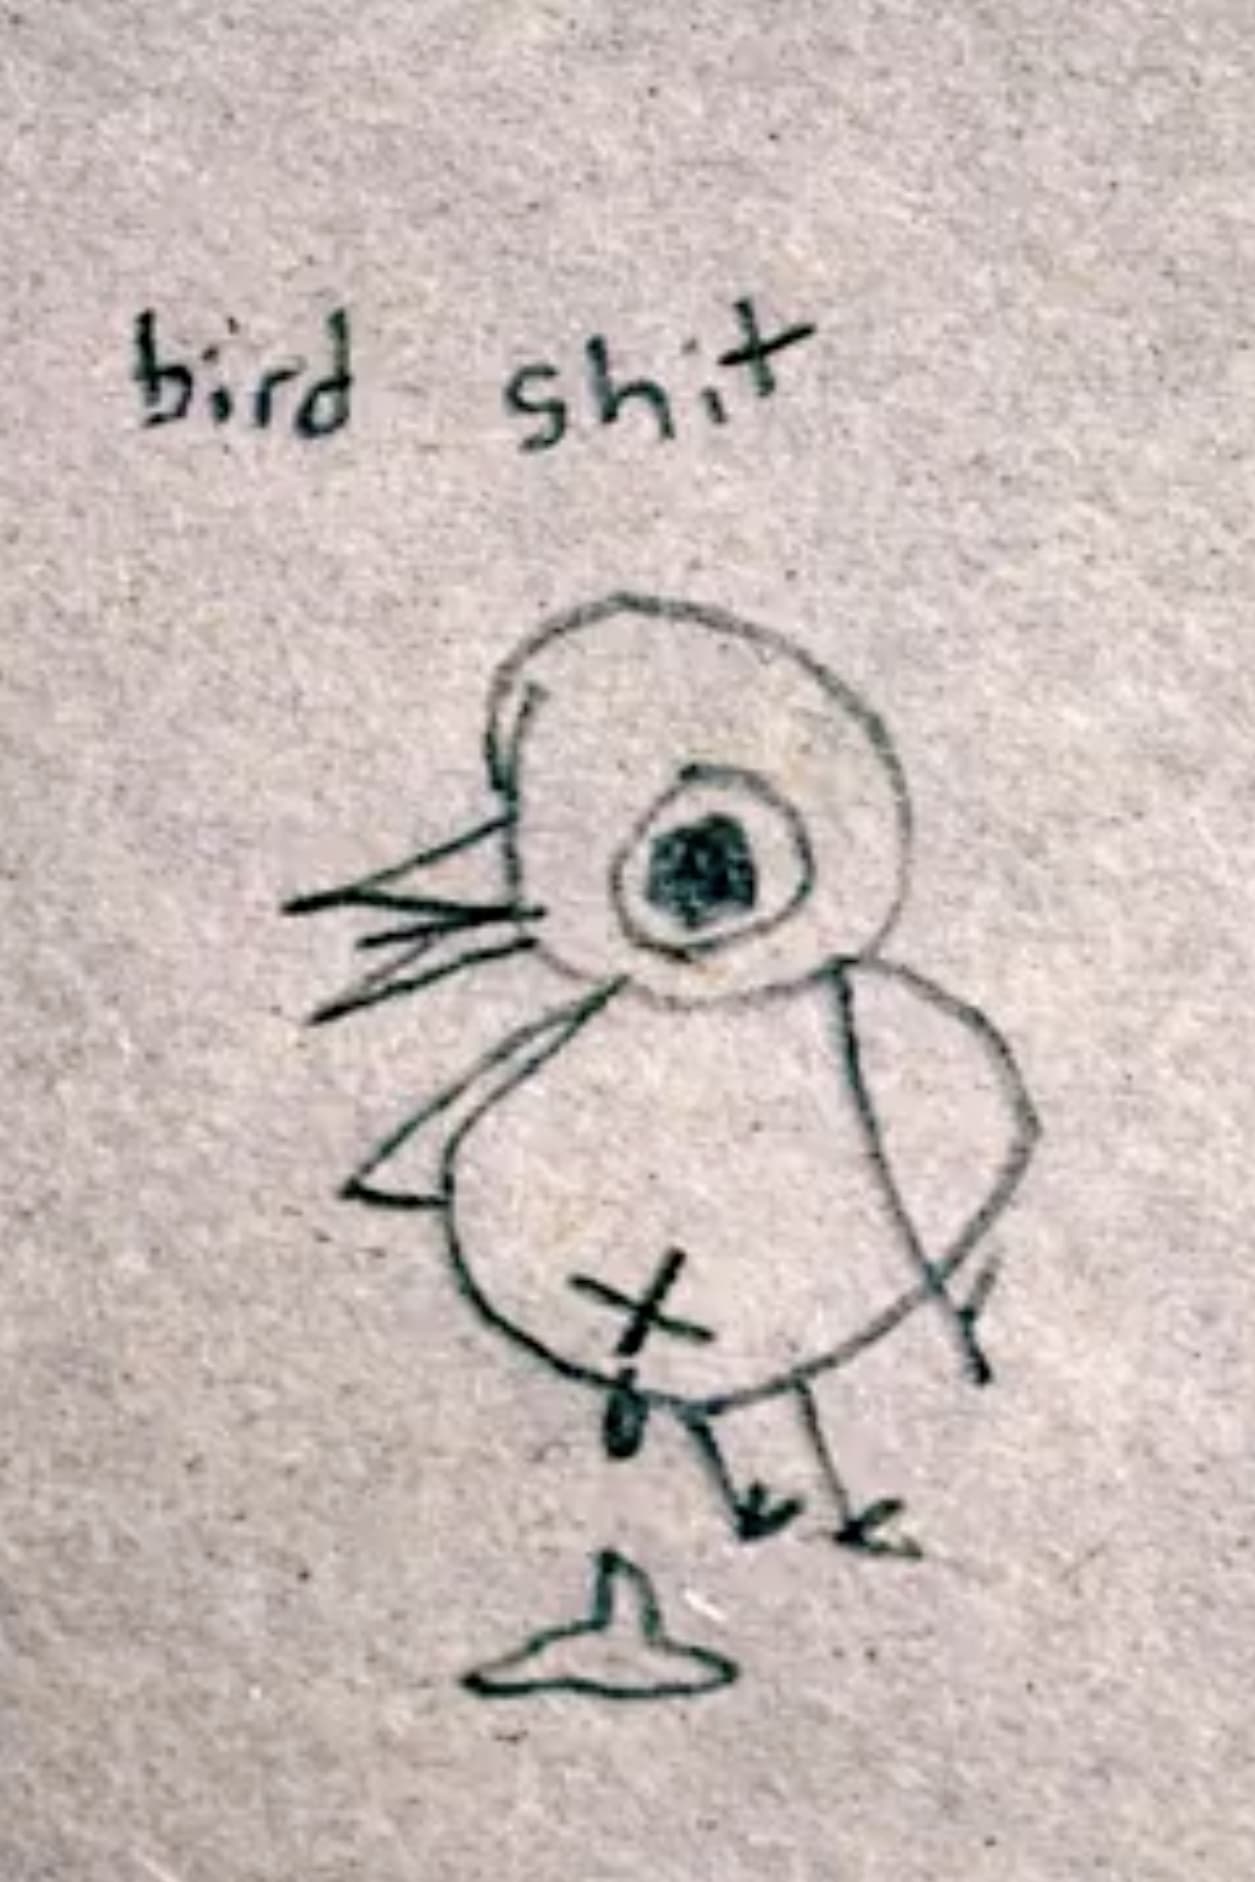 Bird Shit